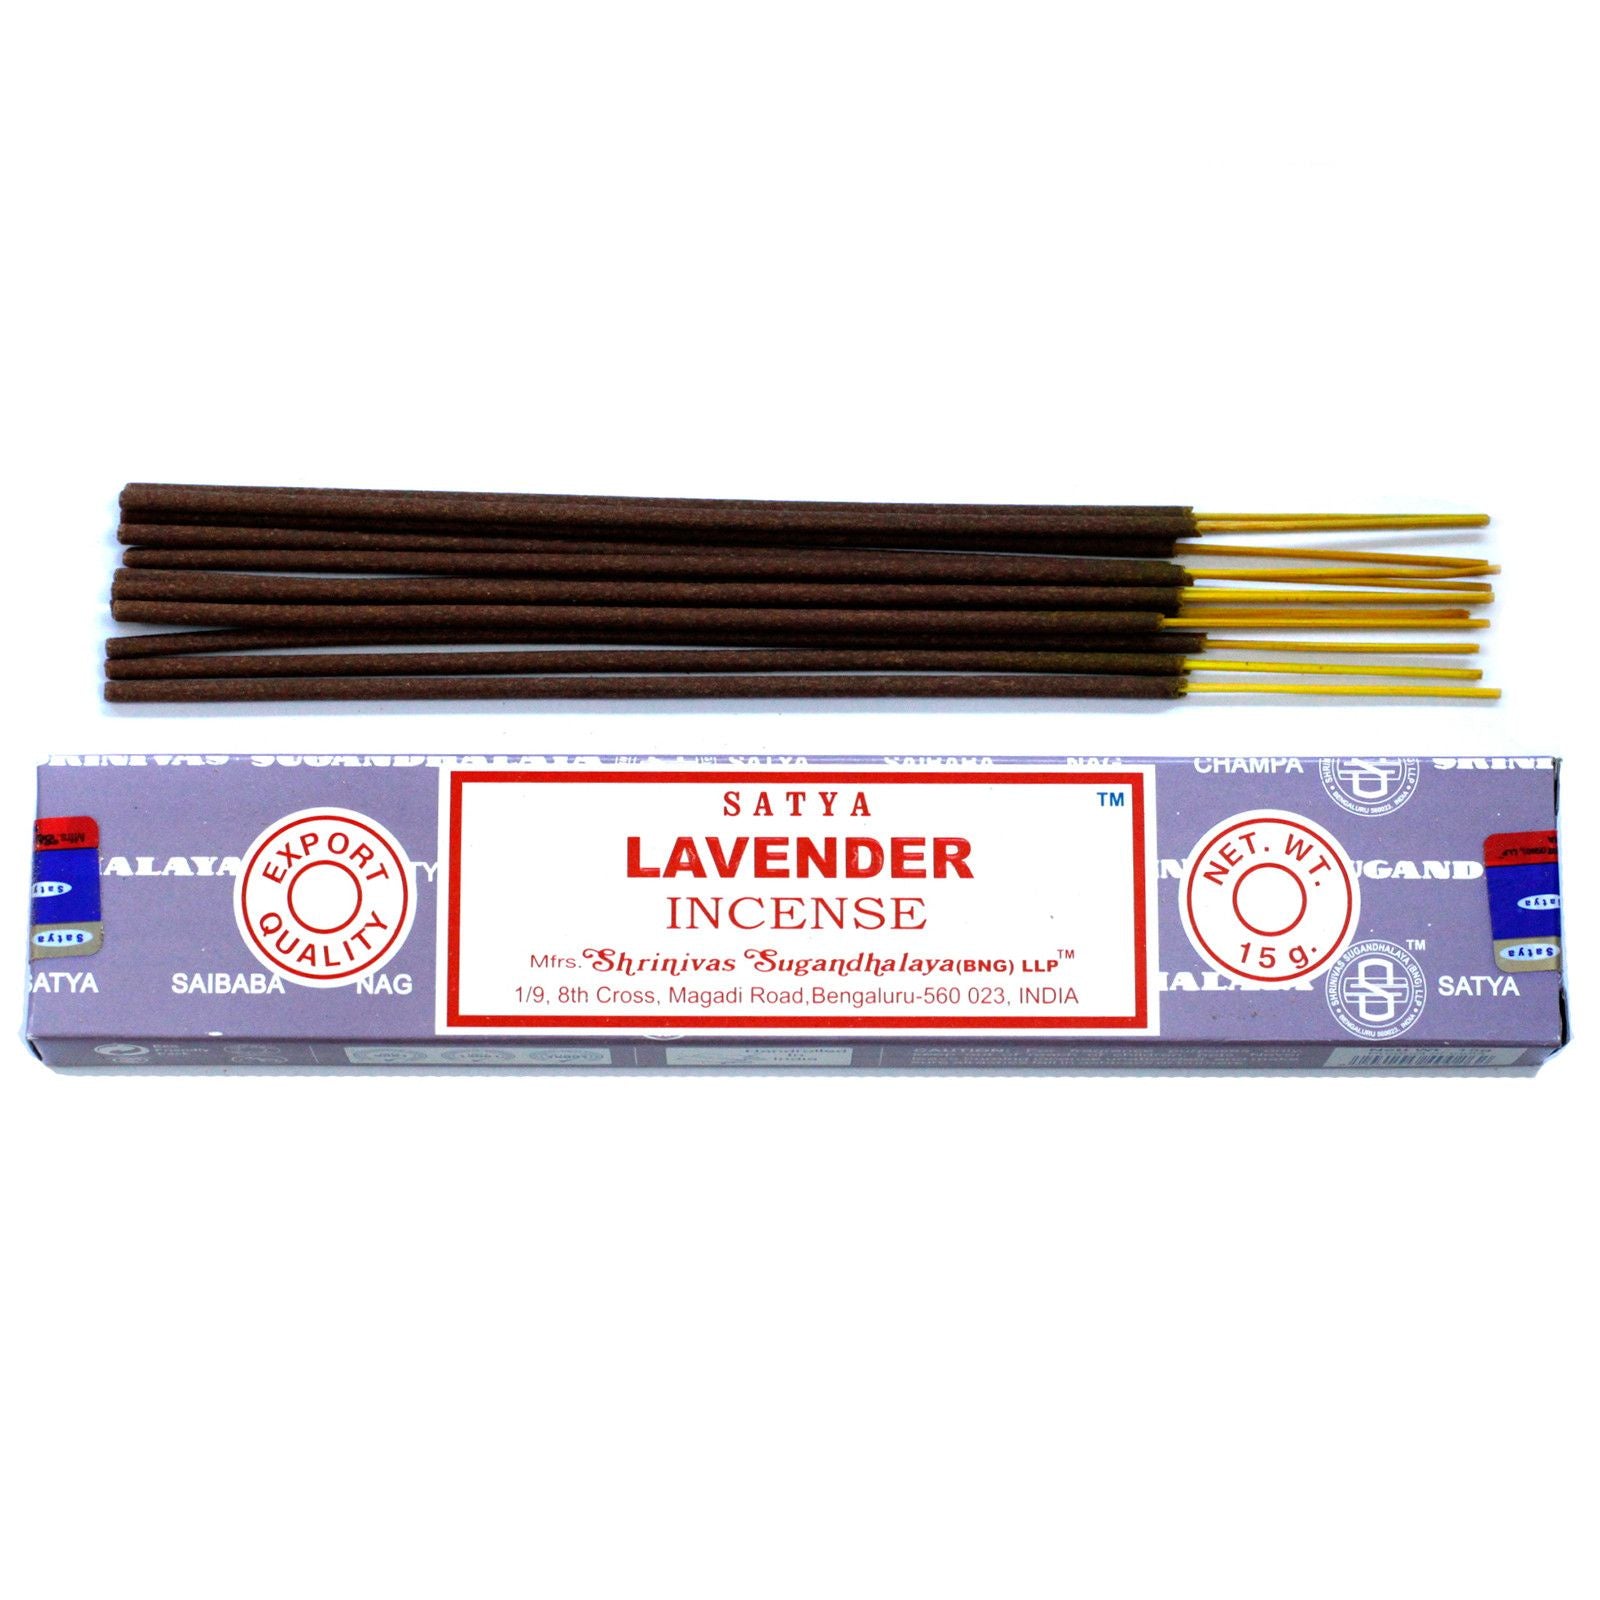 Satya Incense Stick Packs